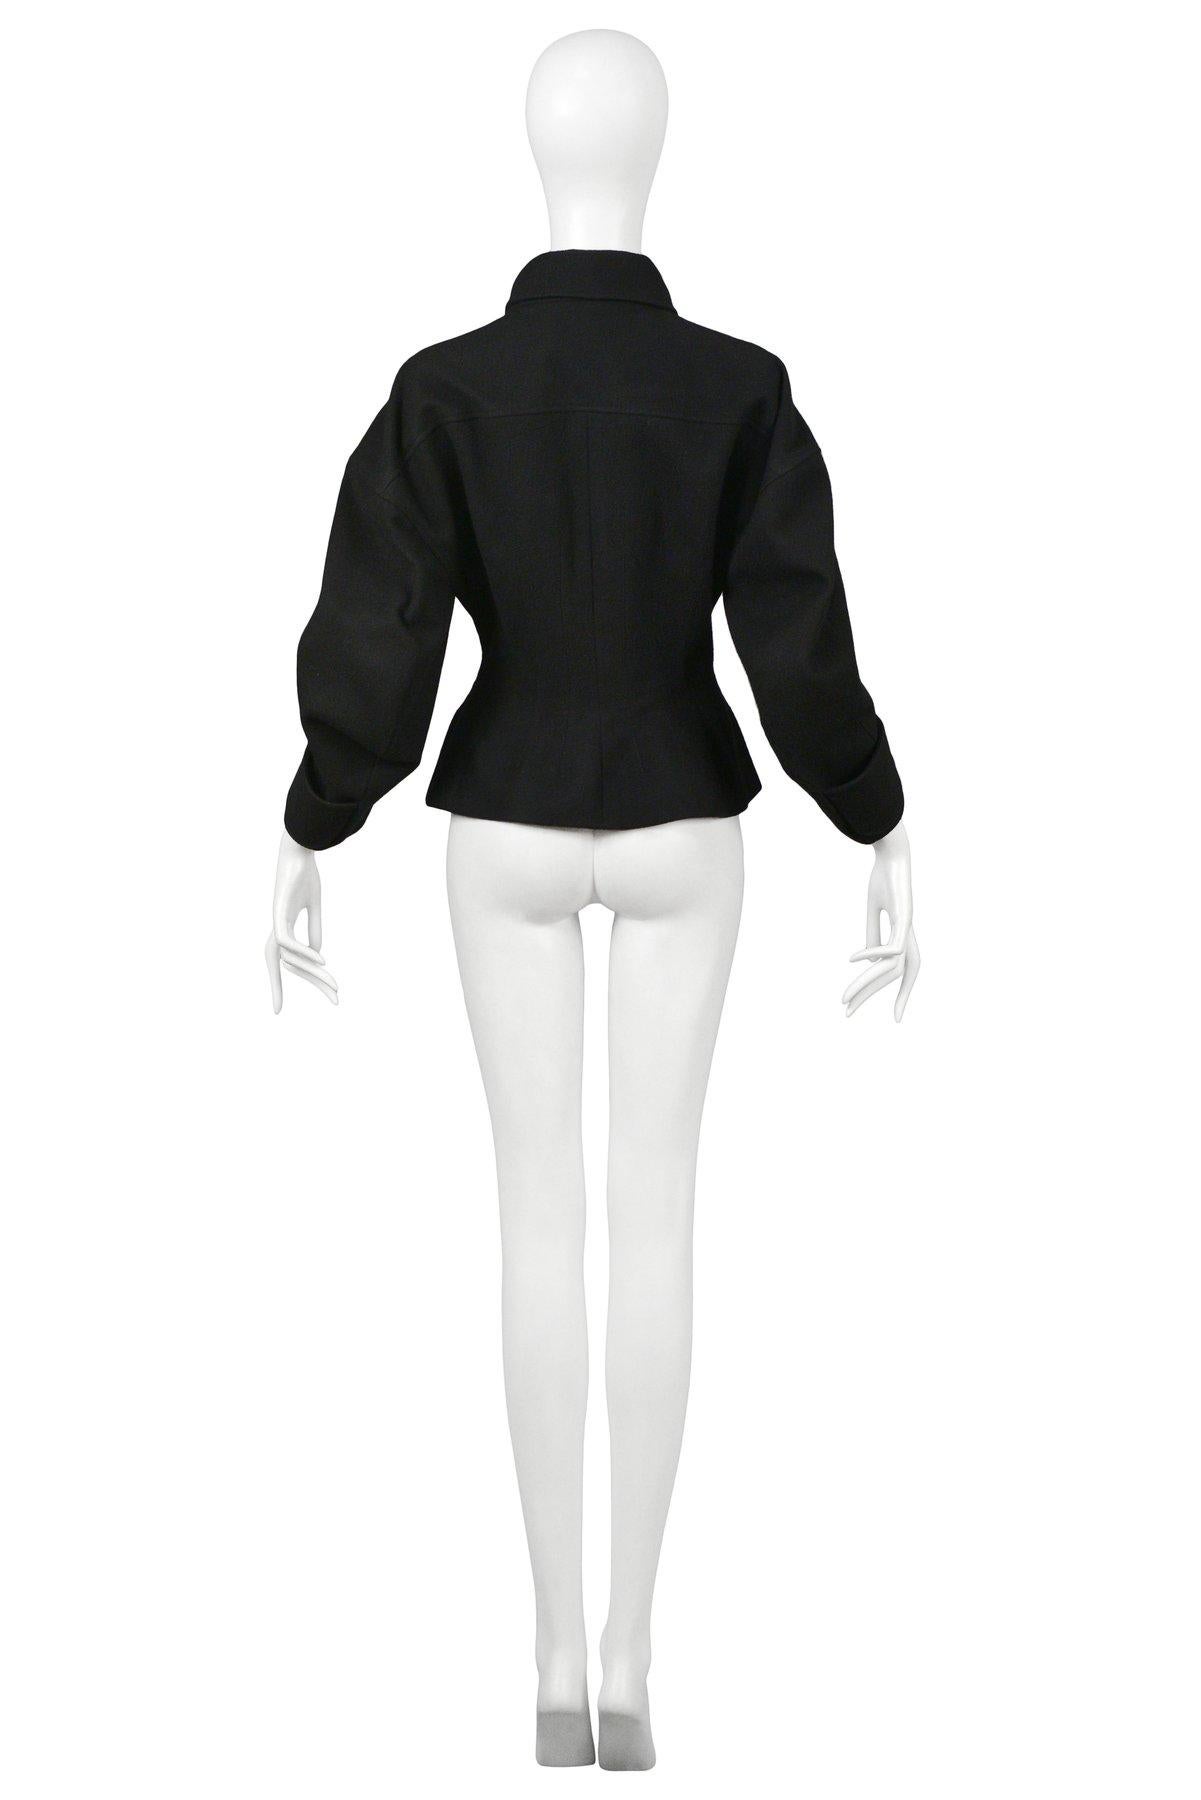 Women's Balenciaga by Nicolas Ghesquiere Black Western Inspired Jacket 2003